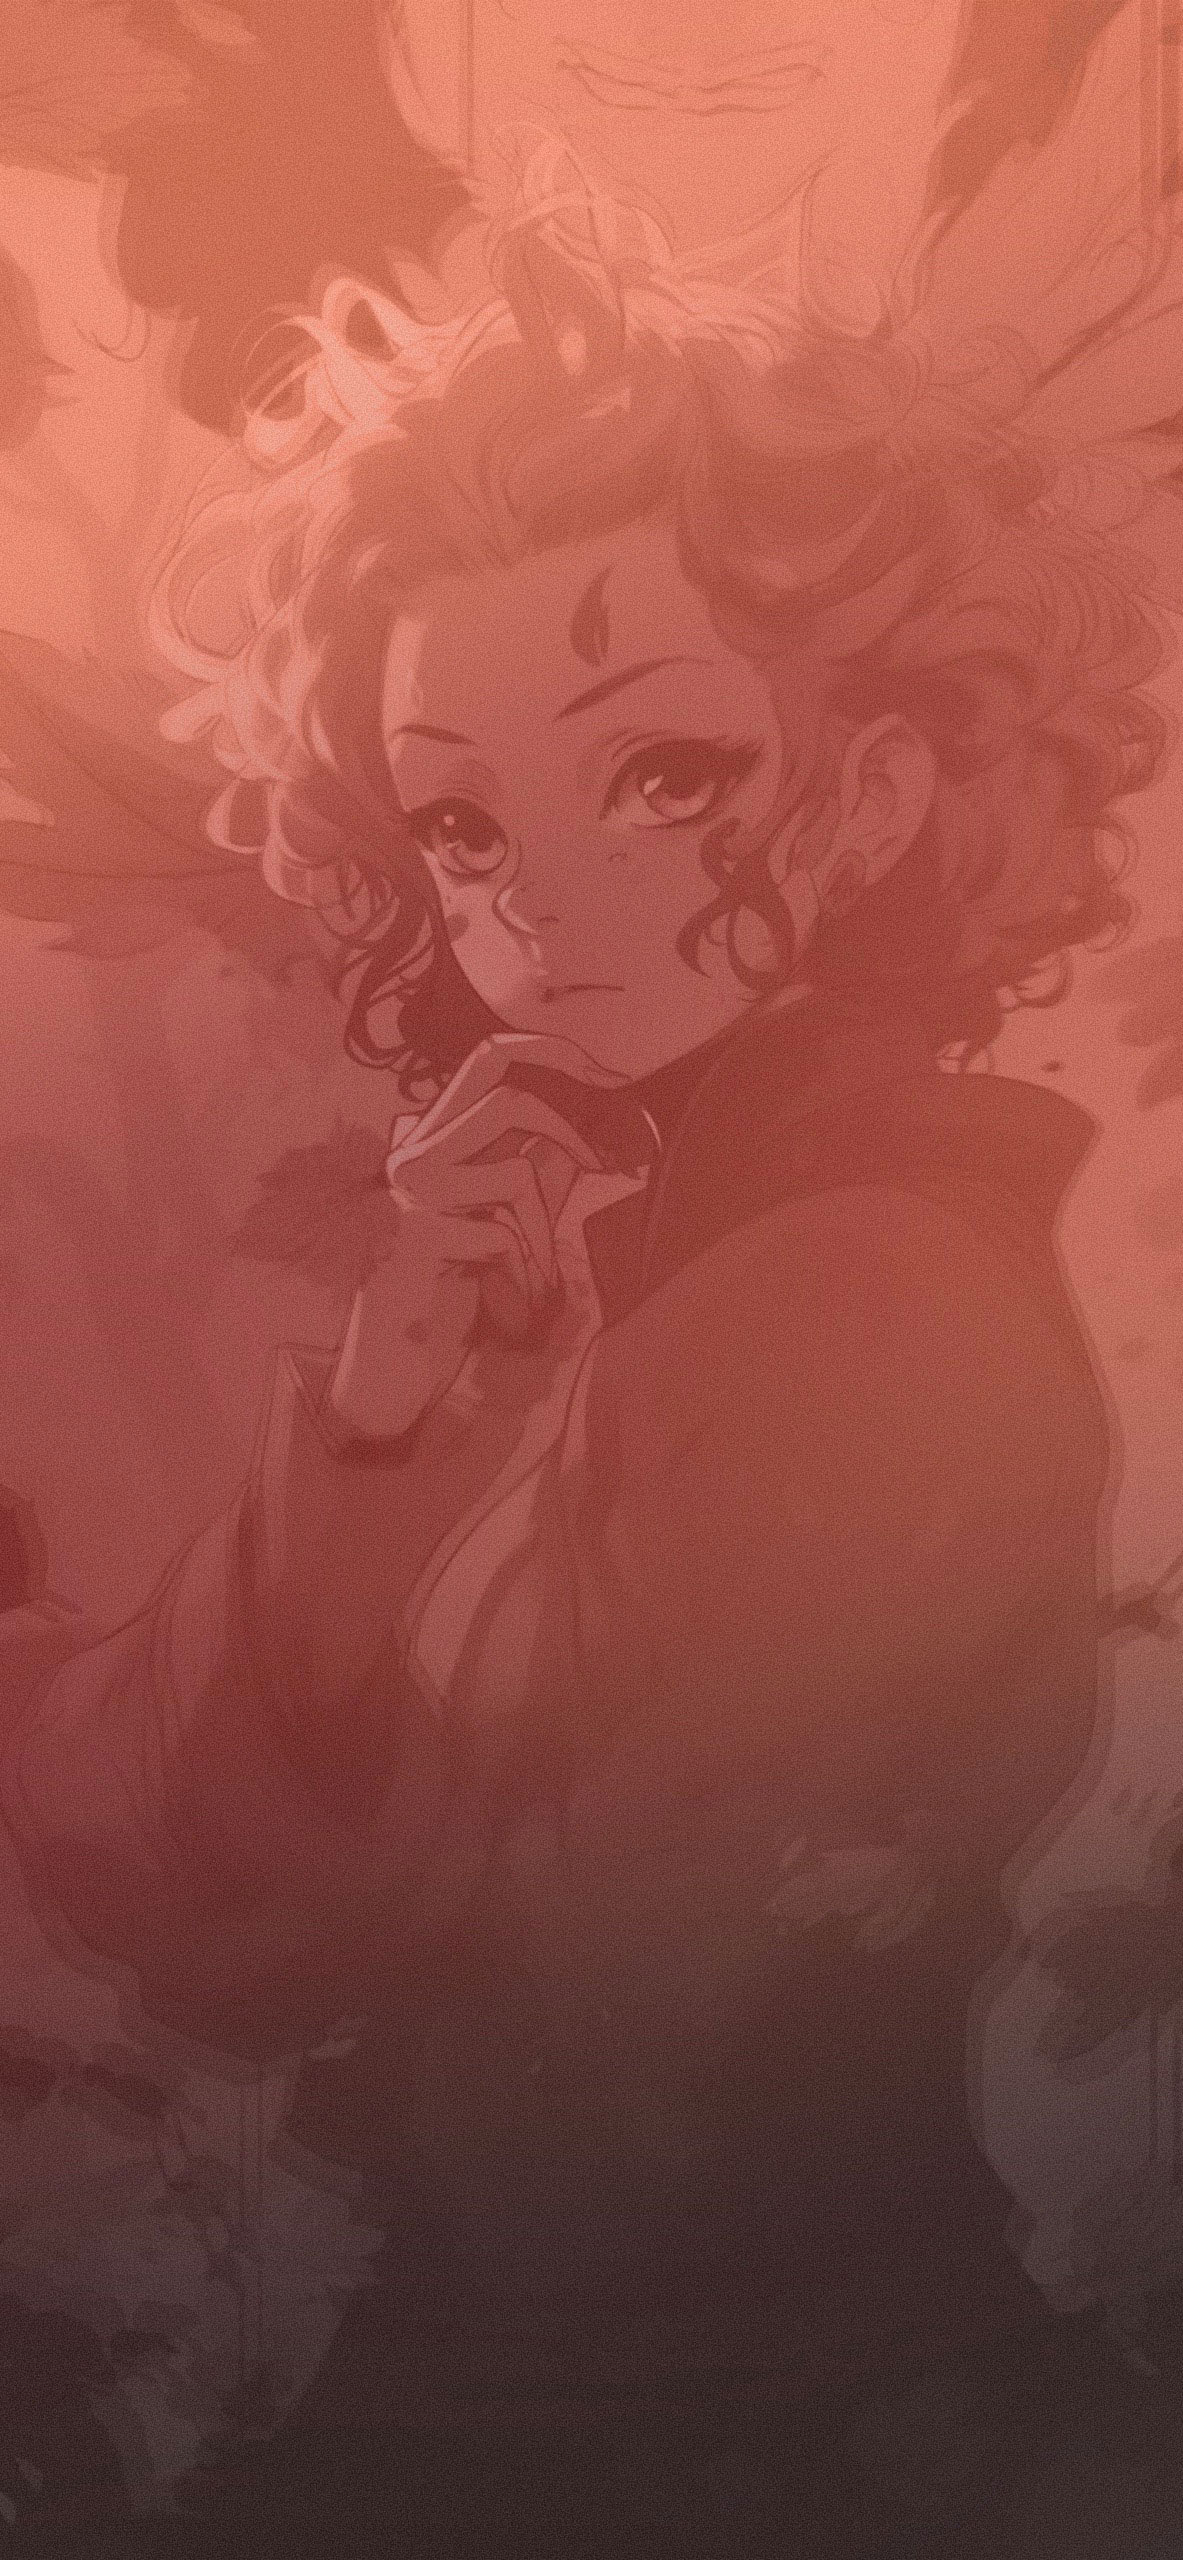 thoughtful anime girl aesthetic orange background